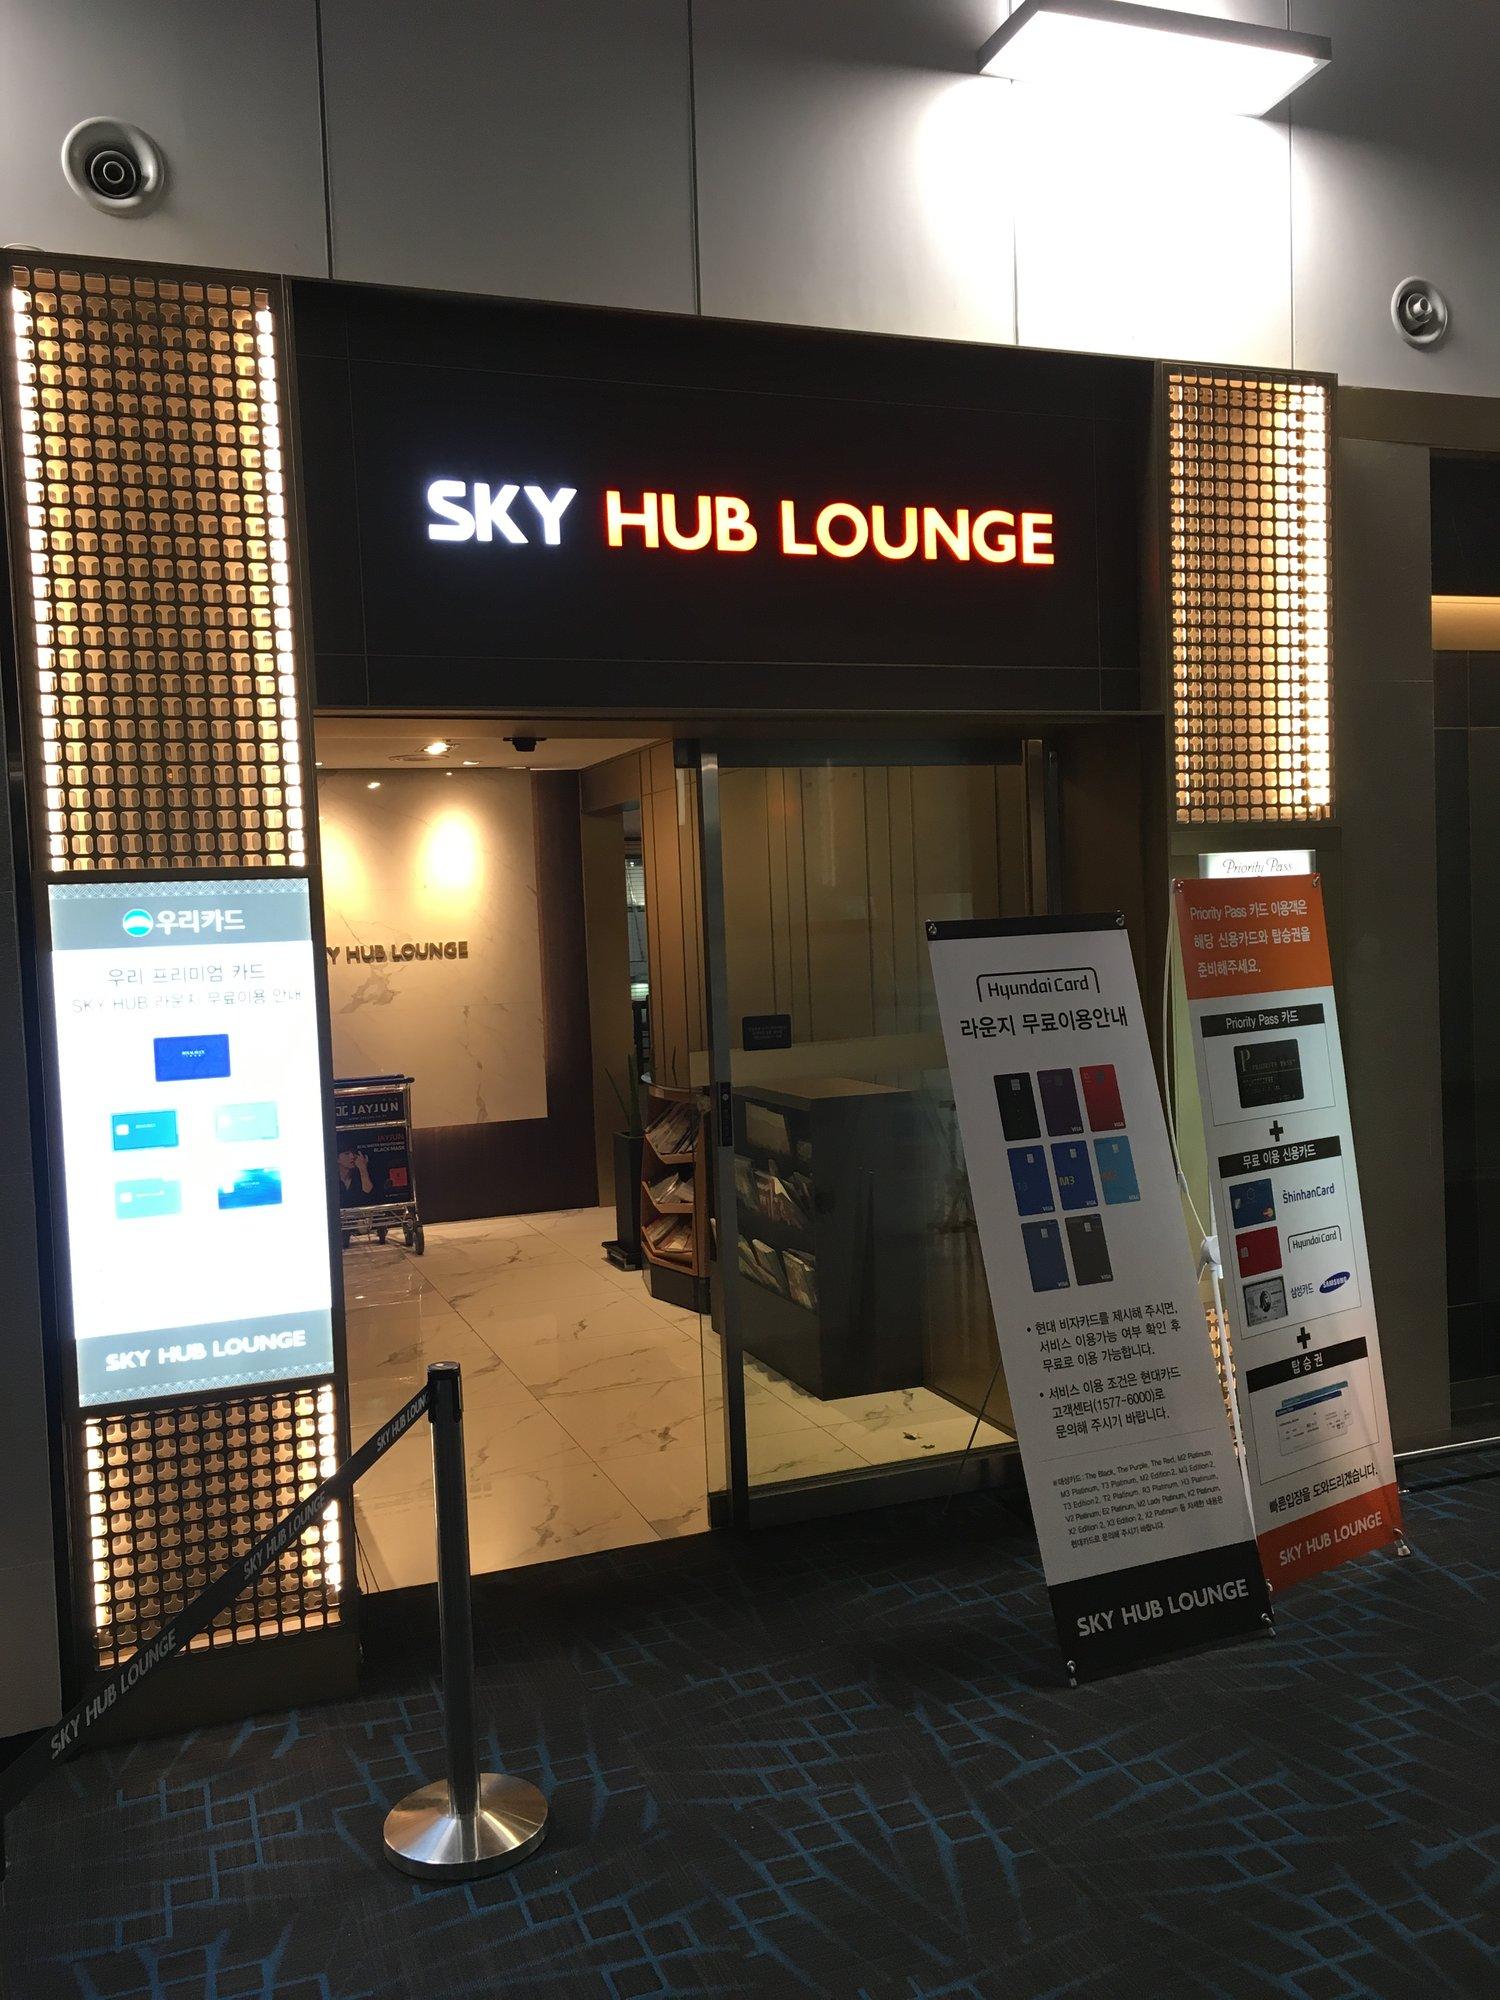 Sky Hub Lounge West image 26 of 30